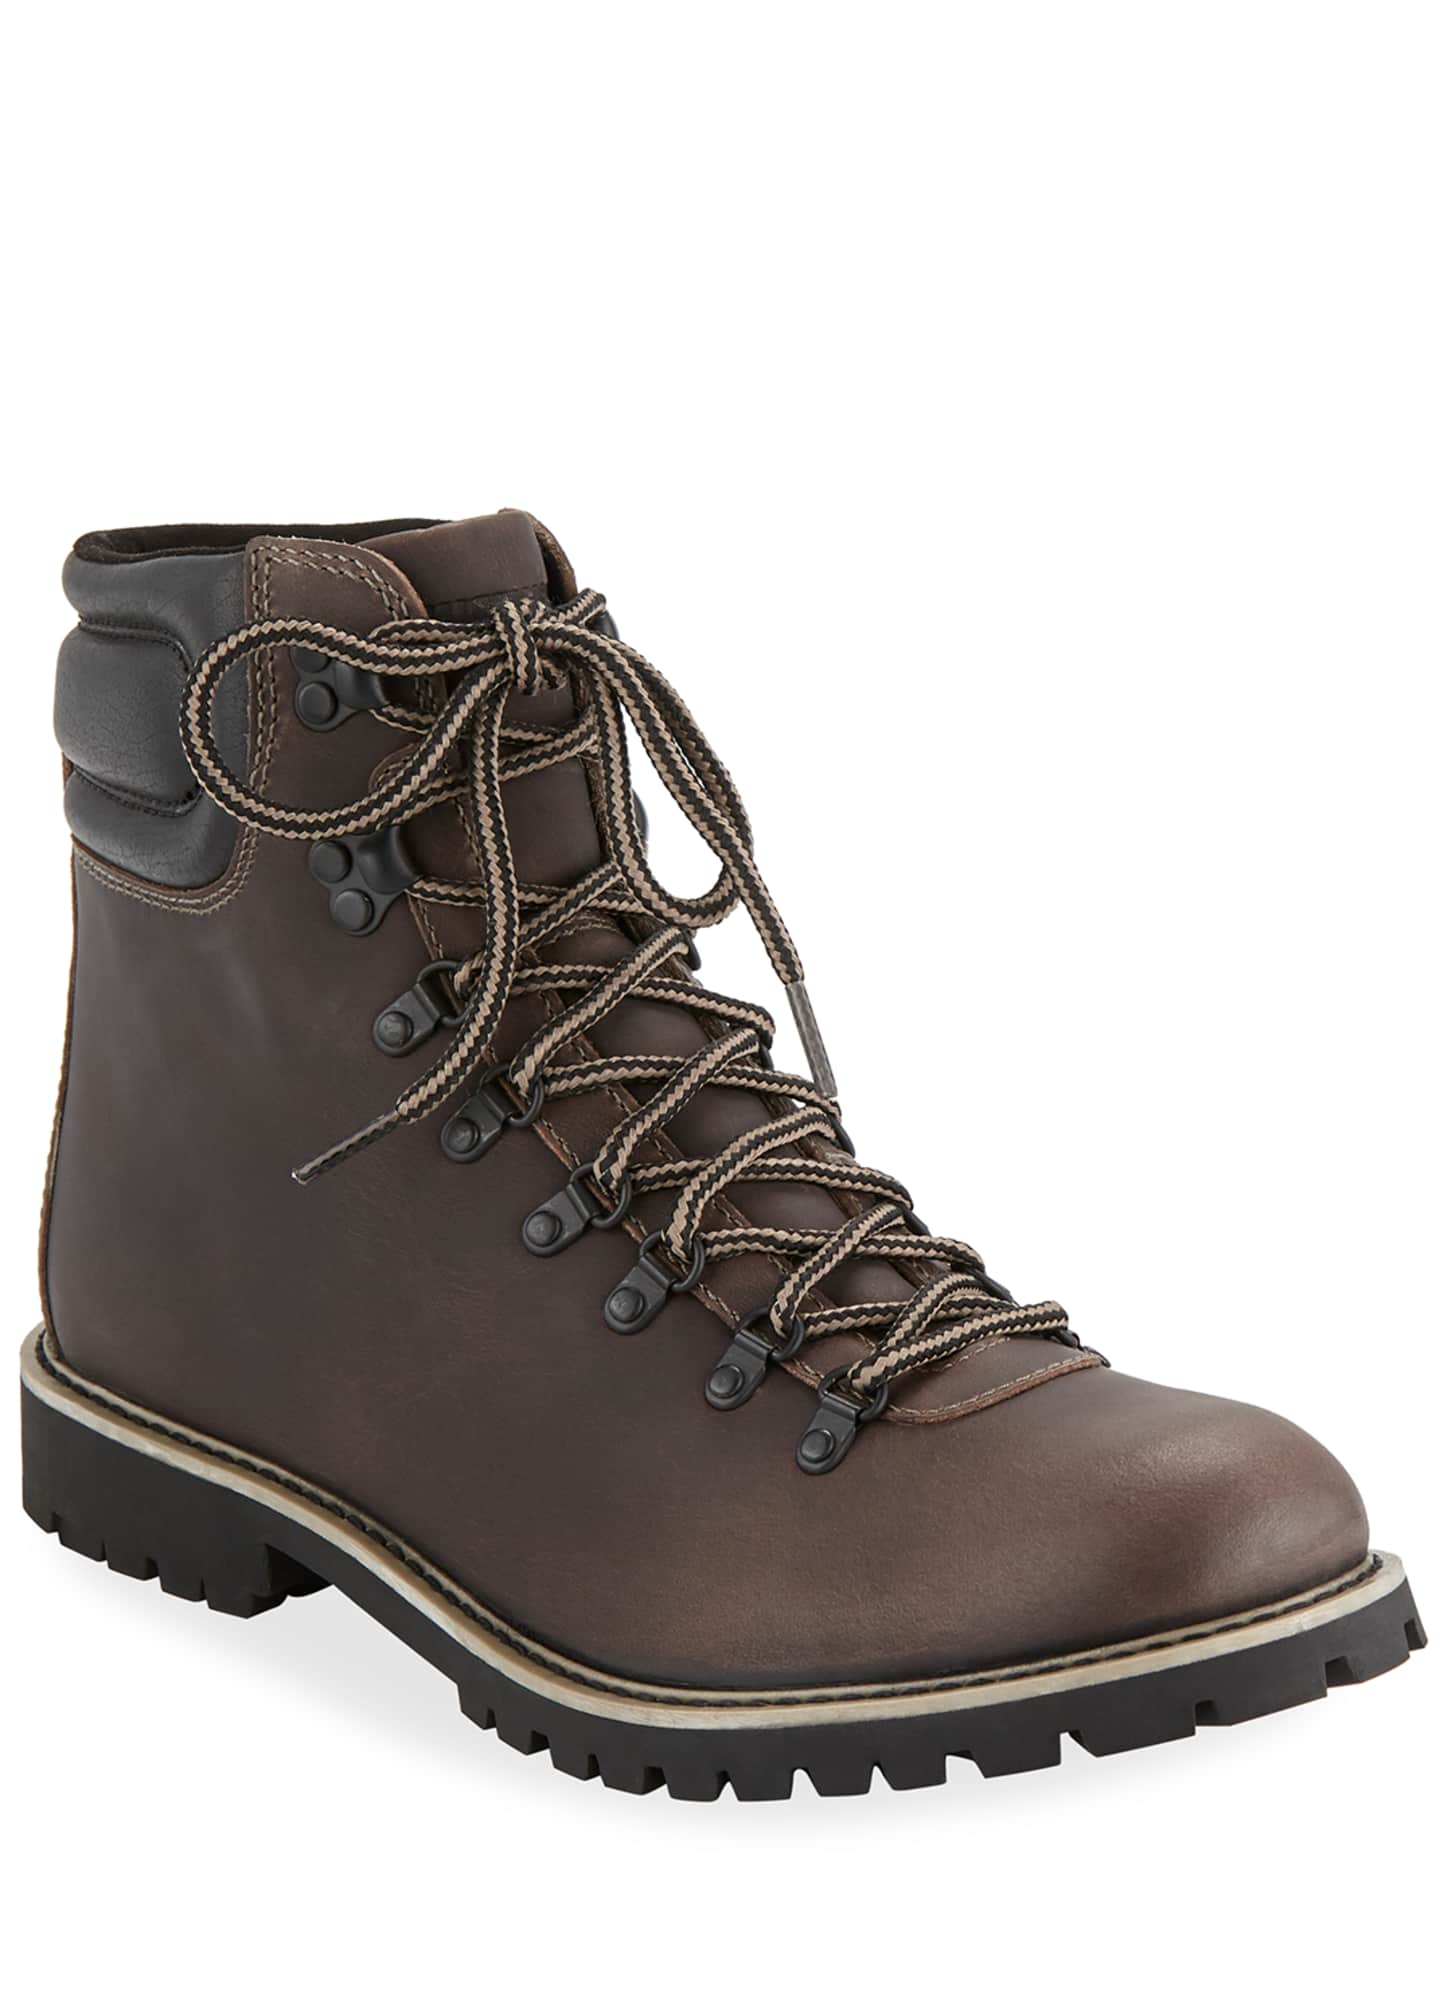 Wolverine Men's Waterproof Leather Hiking Boots - Bergdorf Goodman